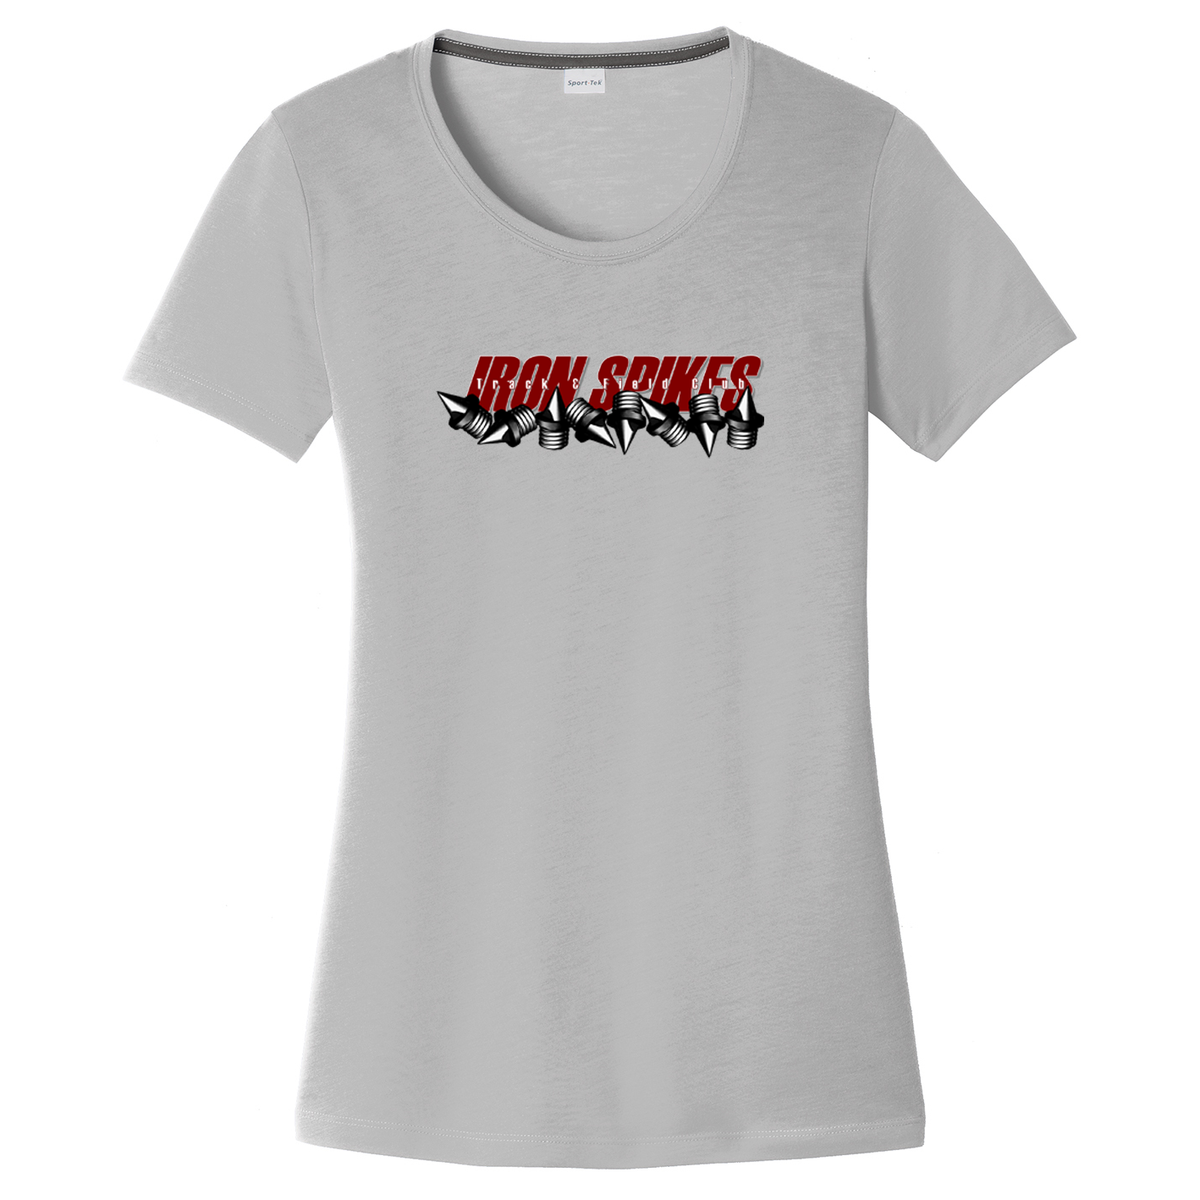 Iron Spikes Track & Field Women's CottonTouch Performance T-Shirt